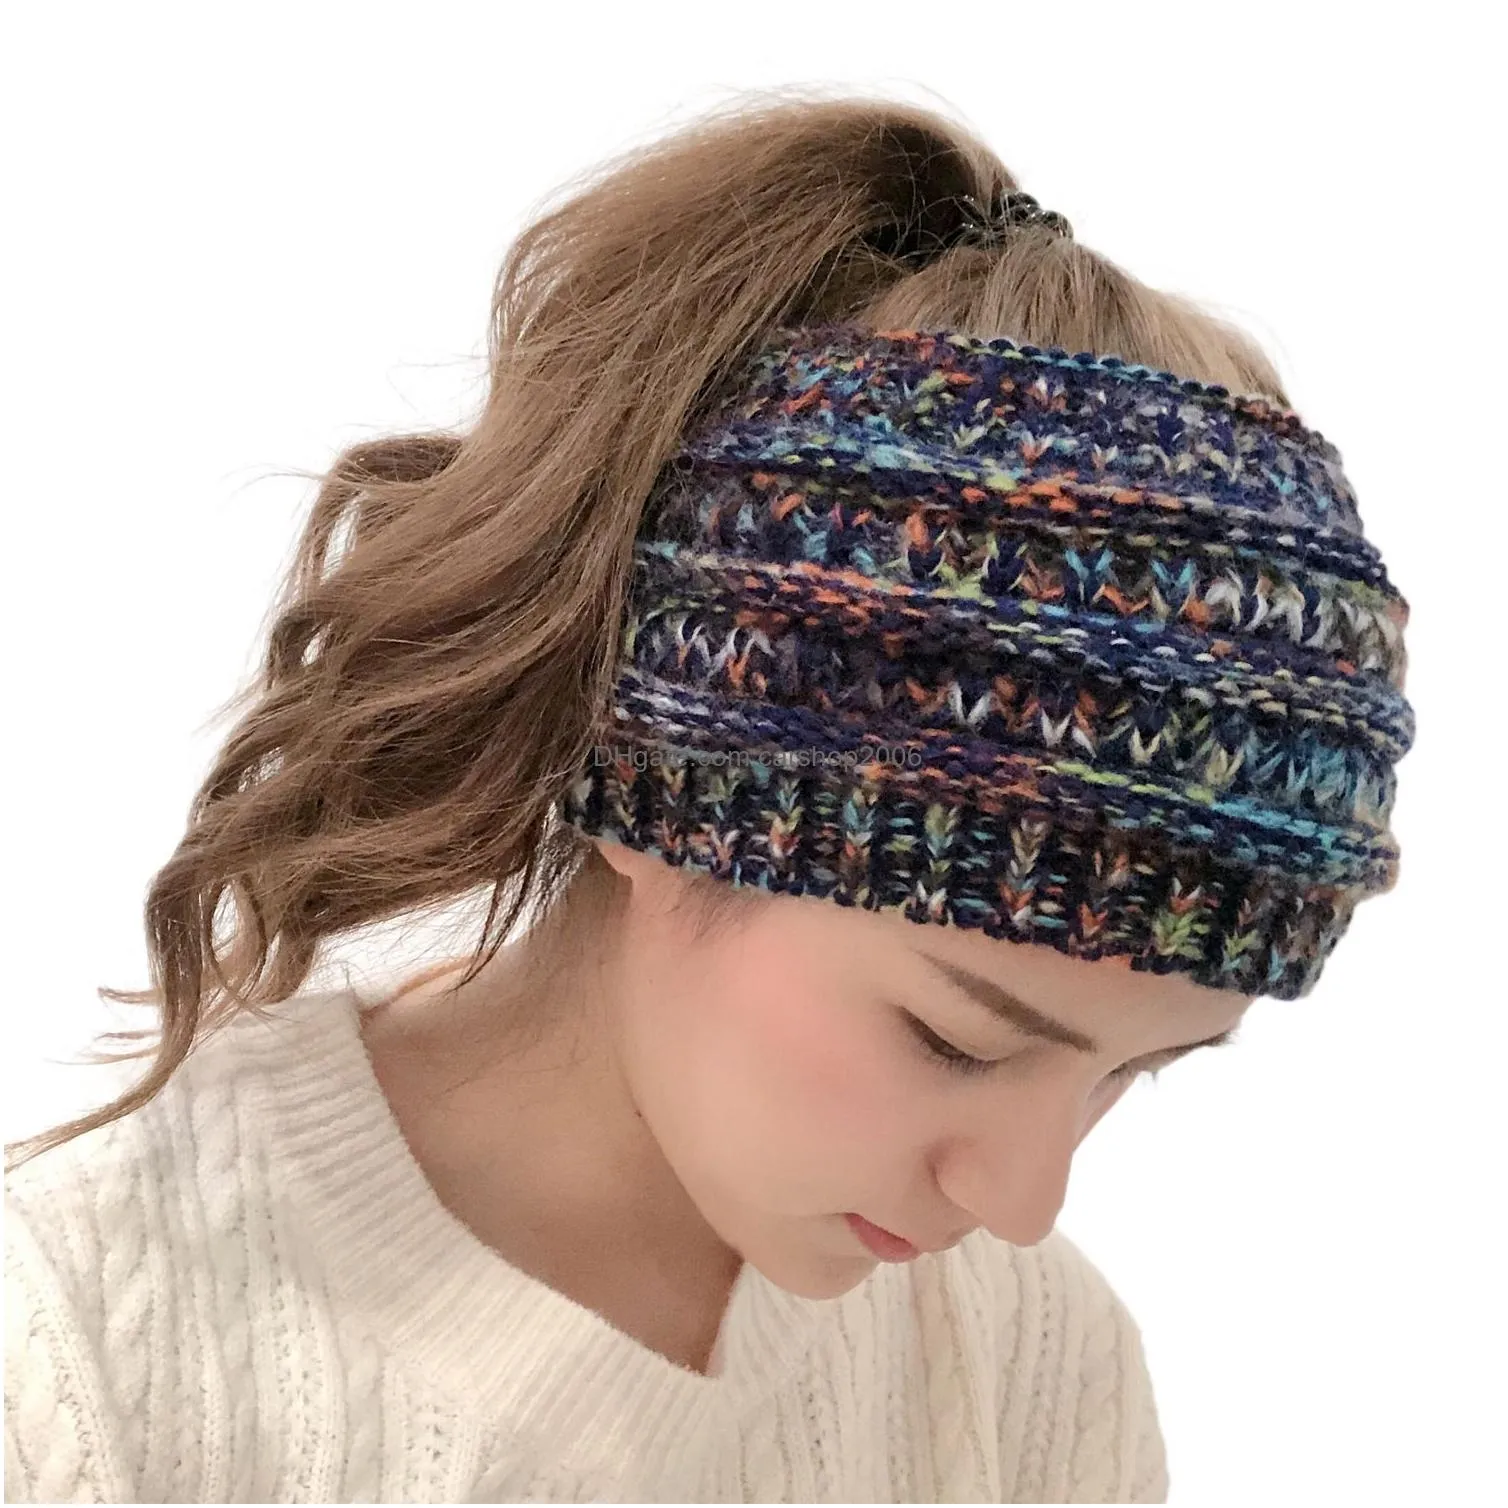 colorful knitted headband women winter sports headwrap hairband turban head band ear warmer beanie cap headbands hair accessories dbc